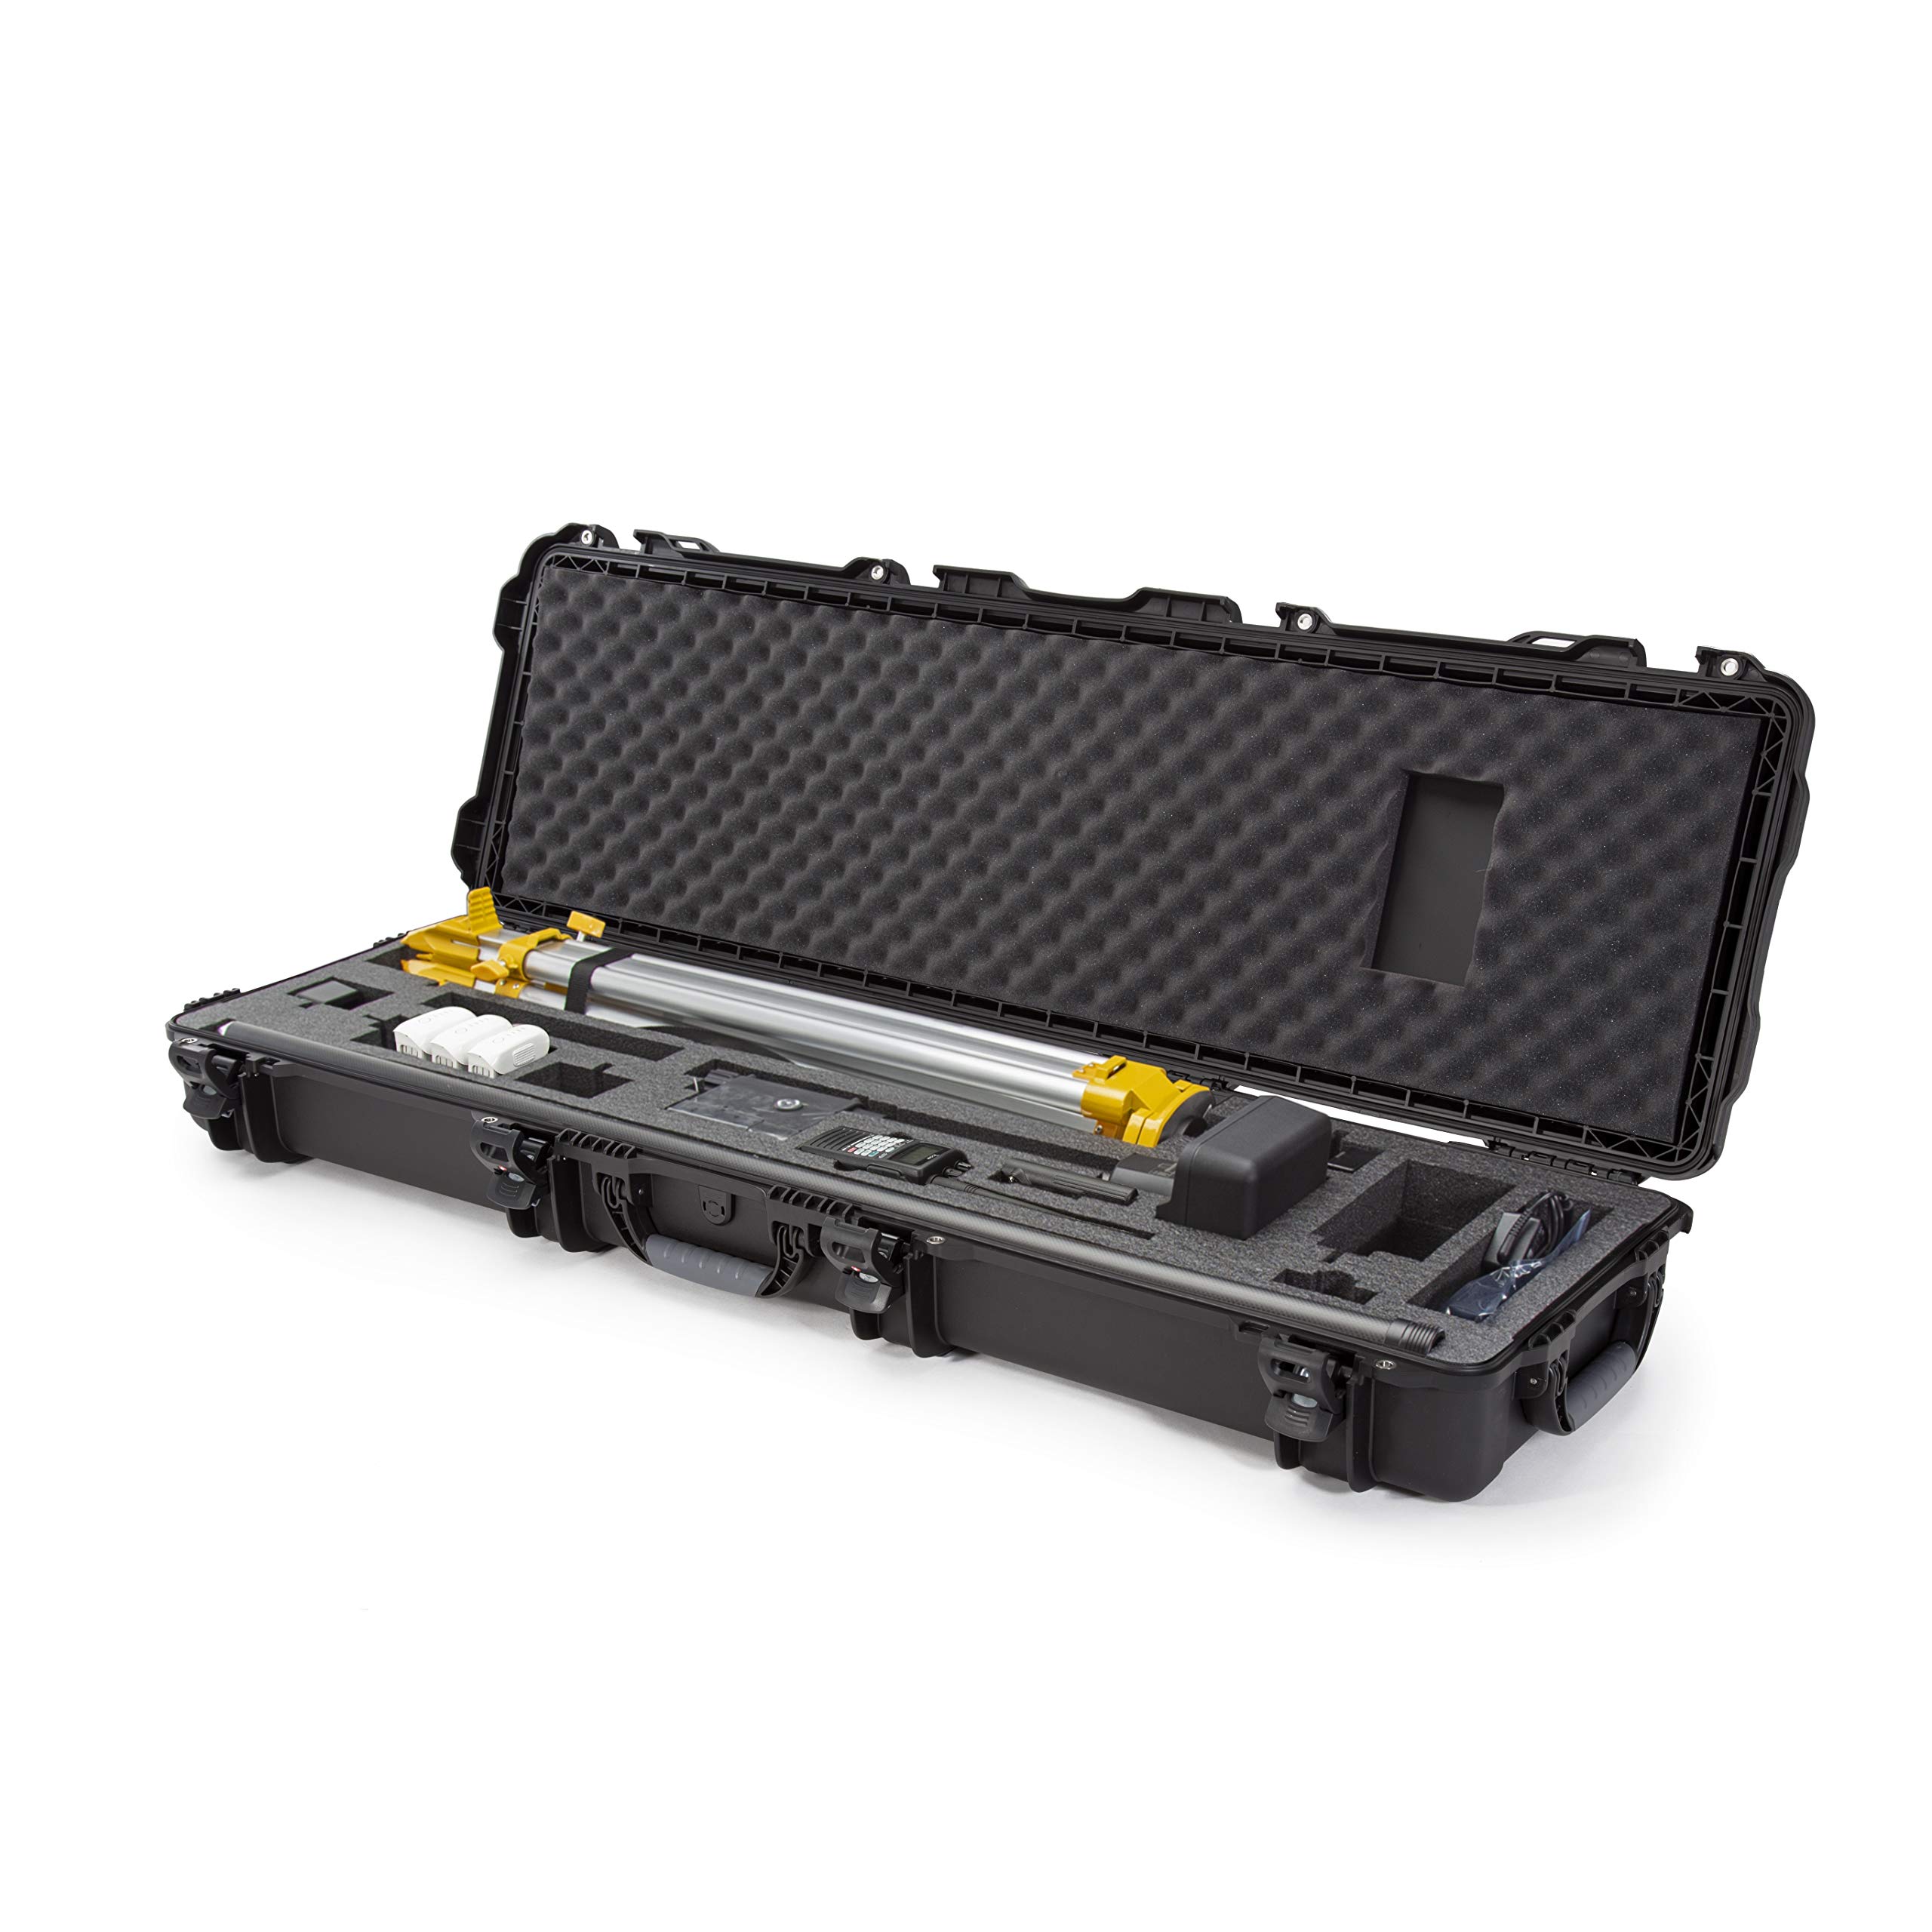 Nanuk 995 Waterproof Hard Case with Custom Foam Insert for DJI Ground Station RTK w/Wheels - Black (995-RTK1)